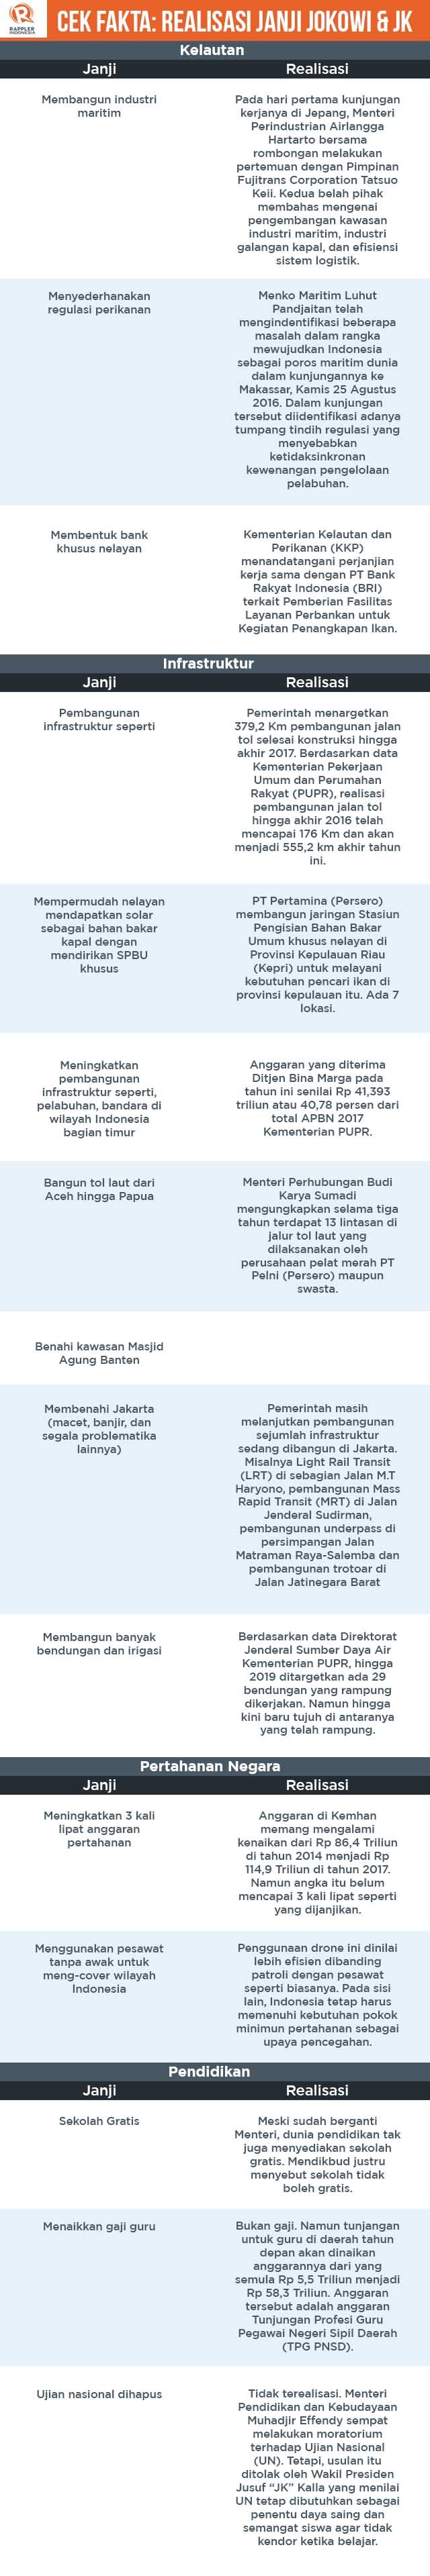 INFOGRAFIS: Cek Fakta realisasi janji Jokowi & JK